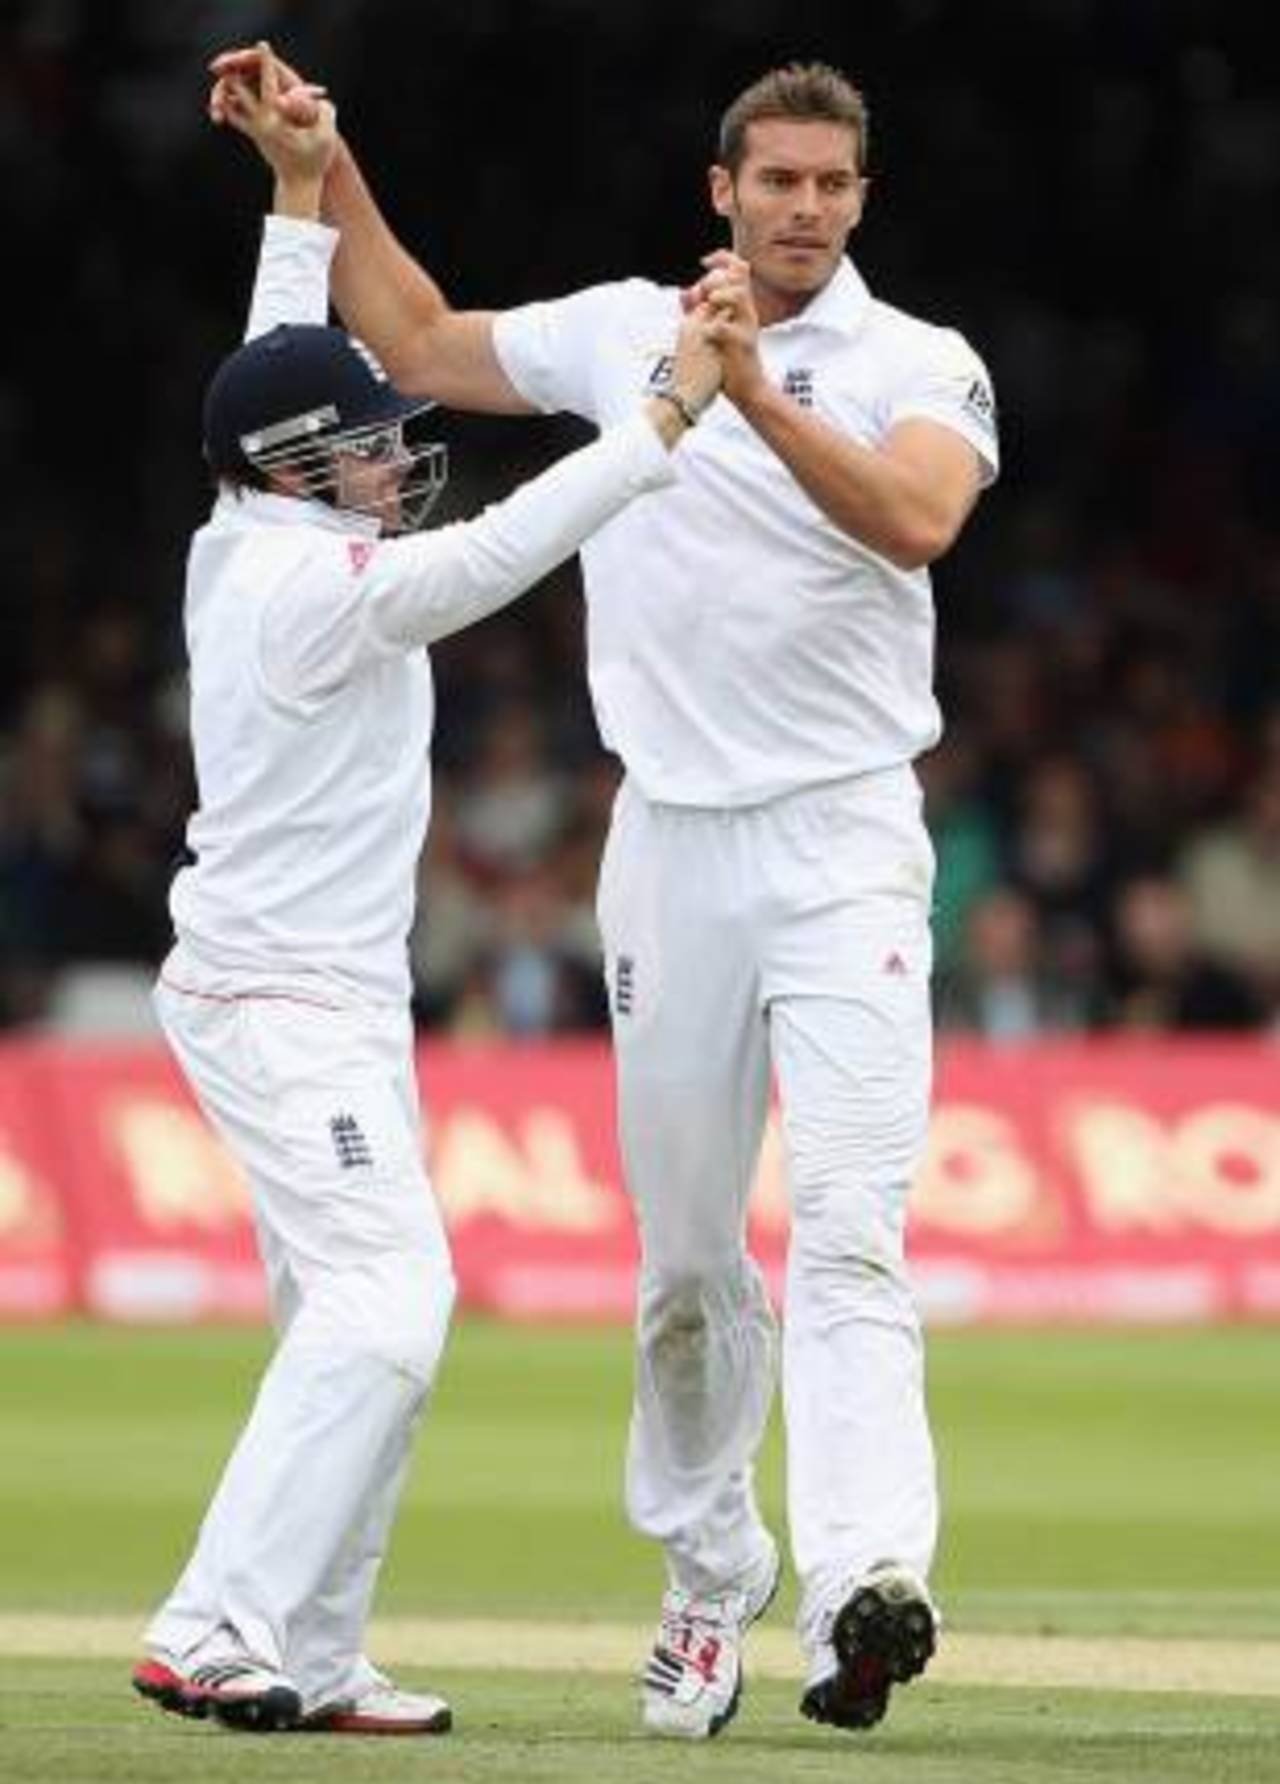 Chris Tremlett got rid of VVS Laxman, England v India, 1st Test, Lord's, 3rd day, July 23, 2011